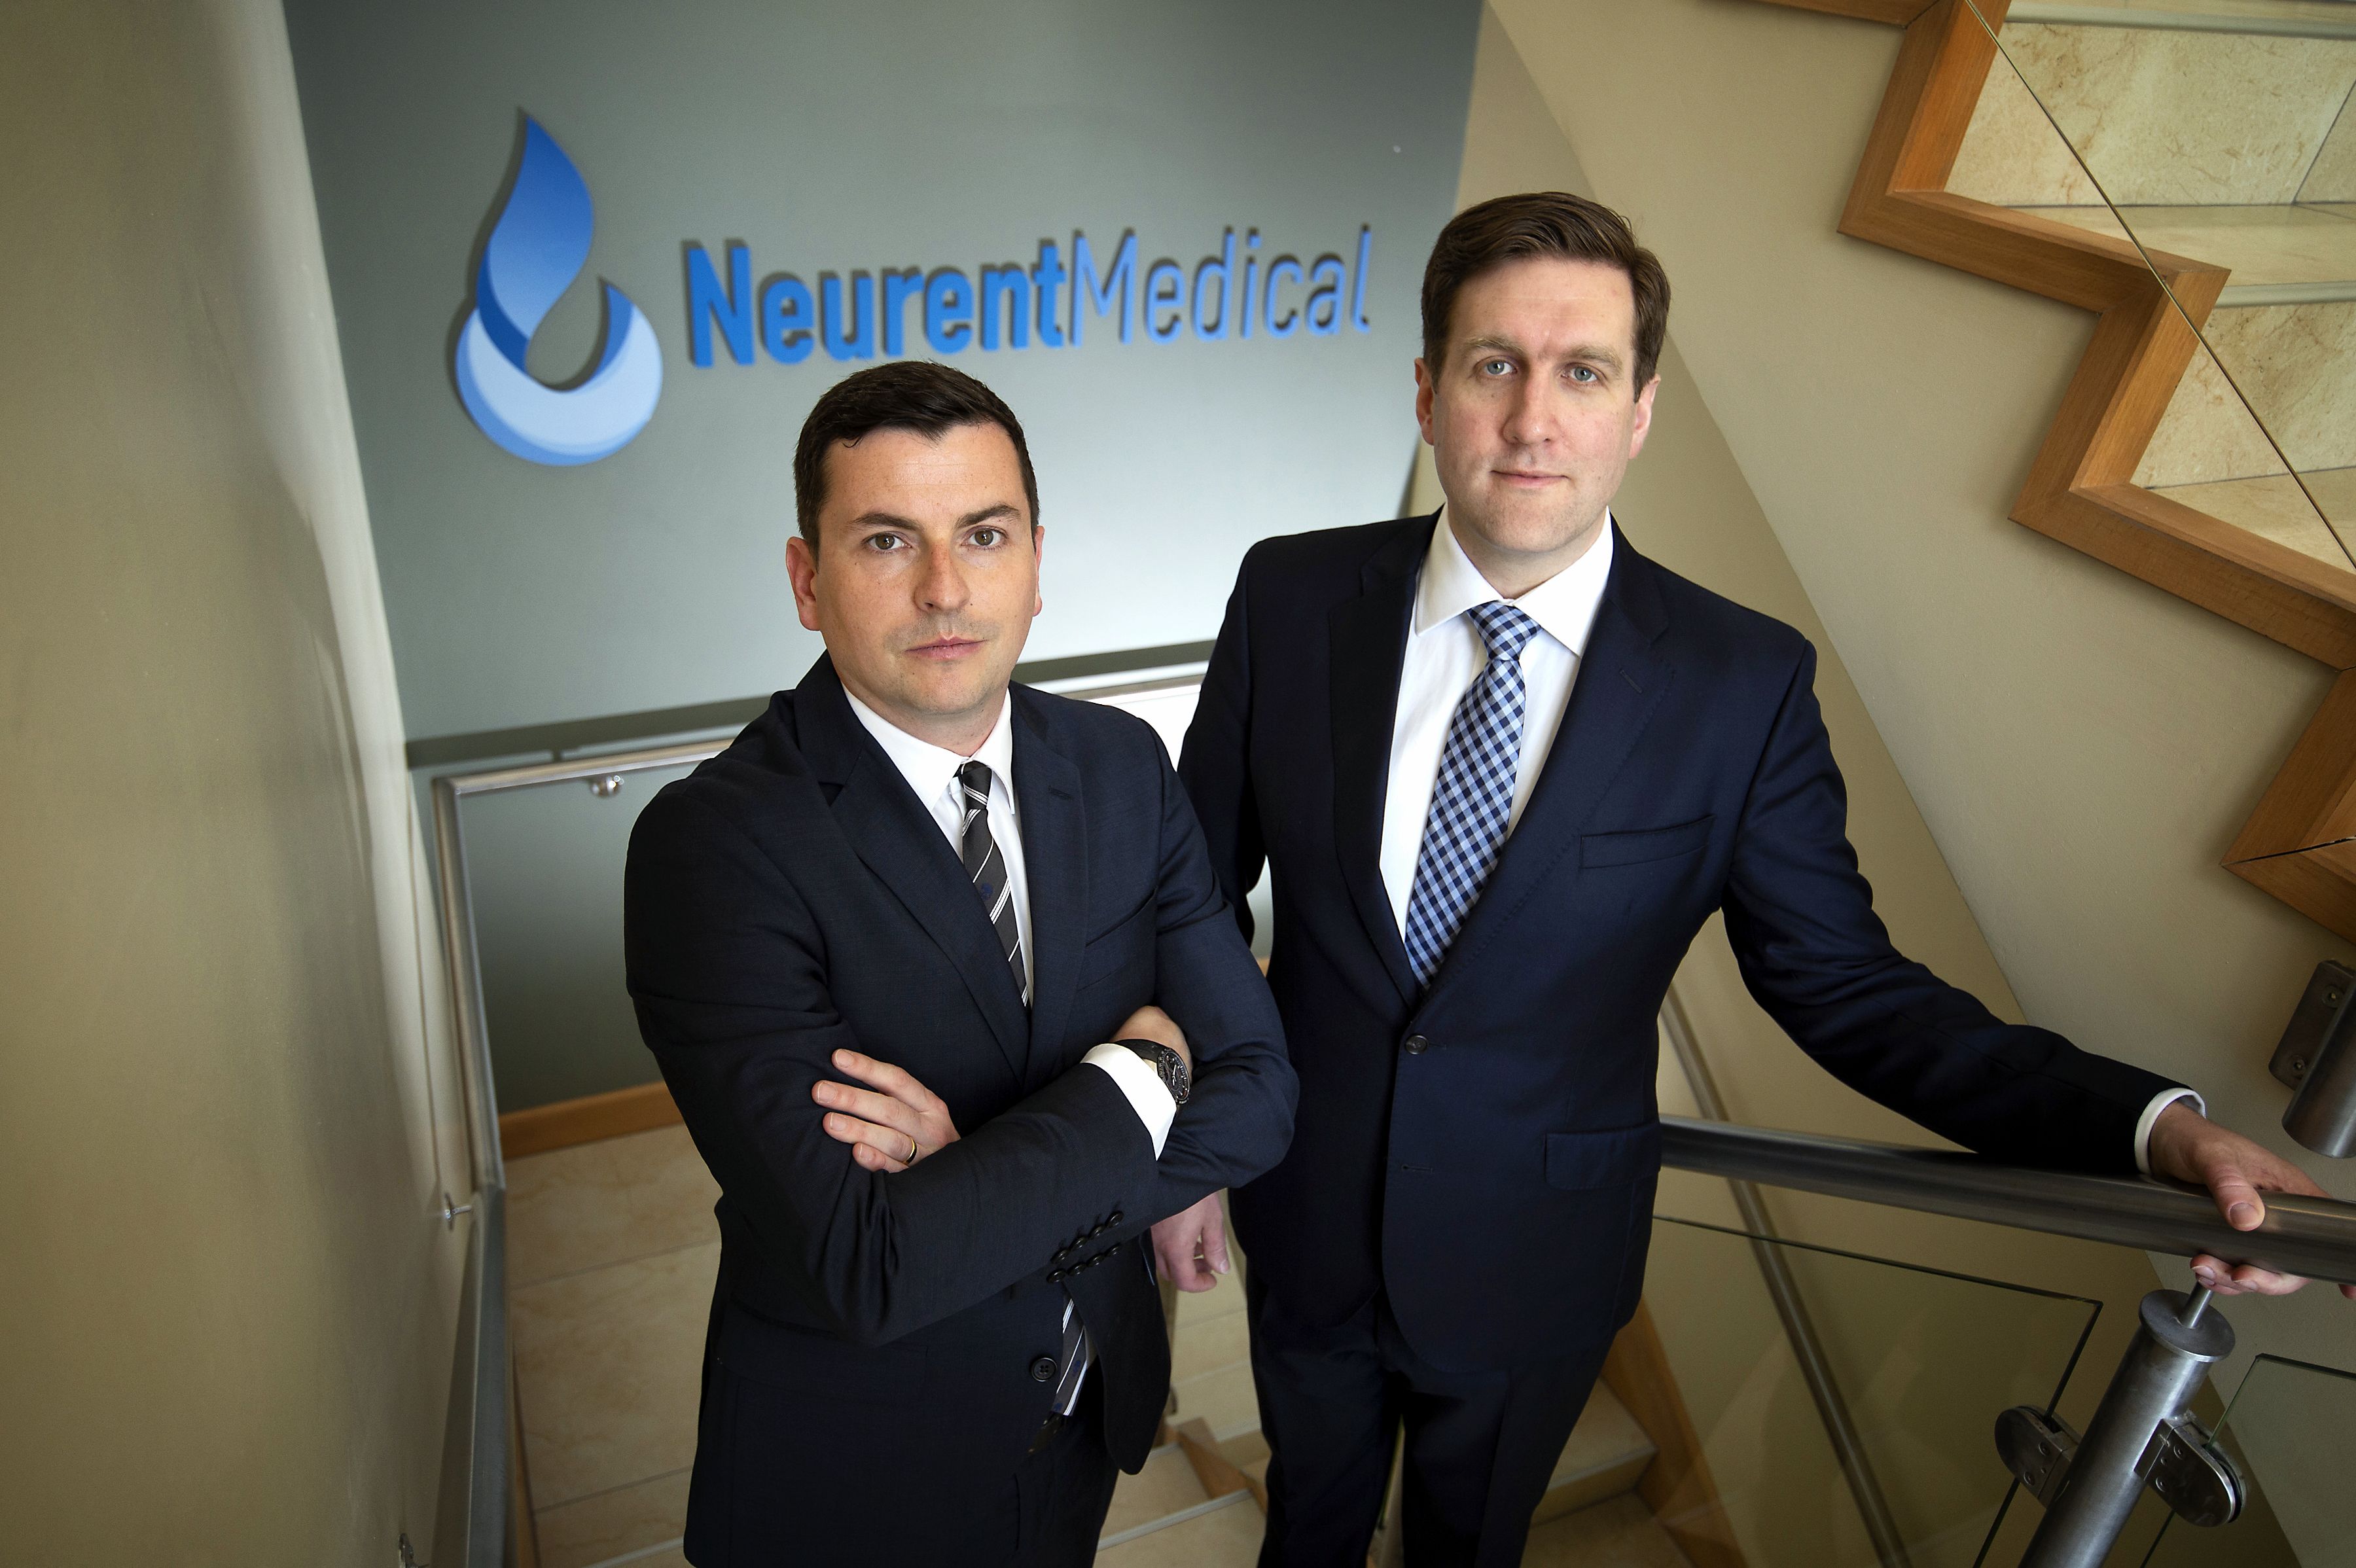 Neurent Medical